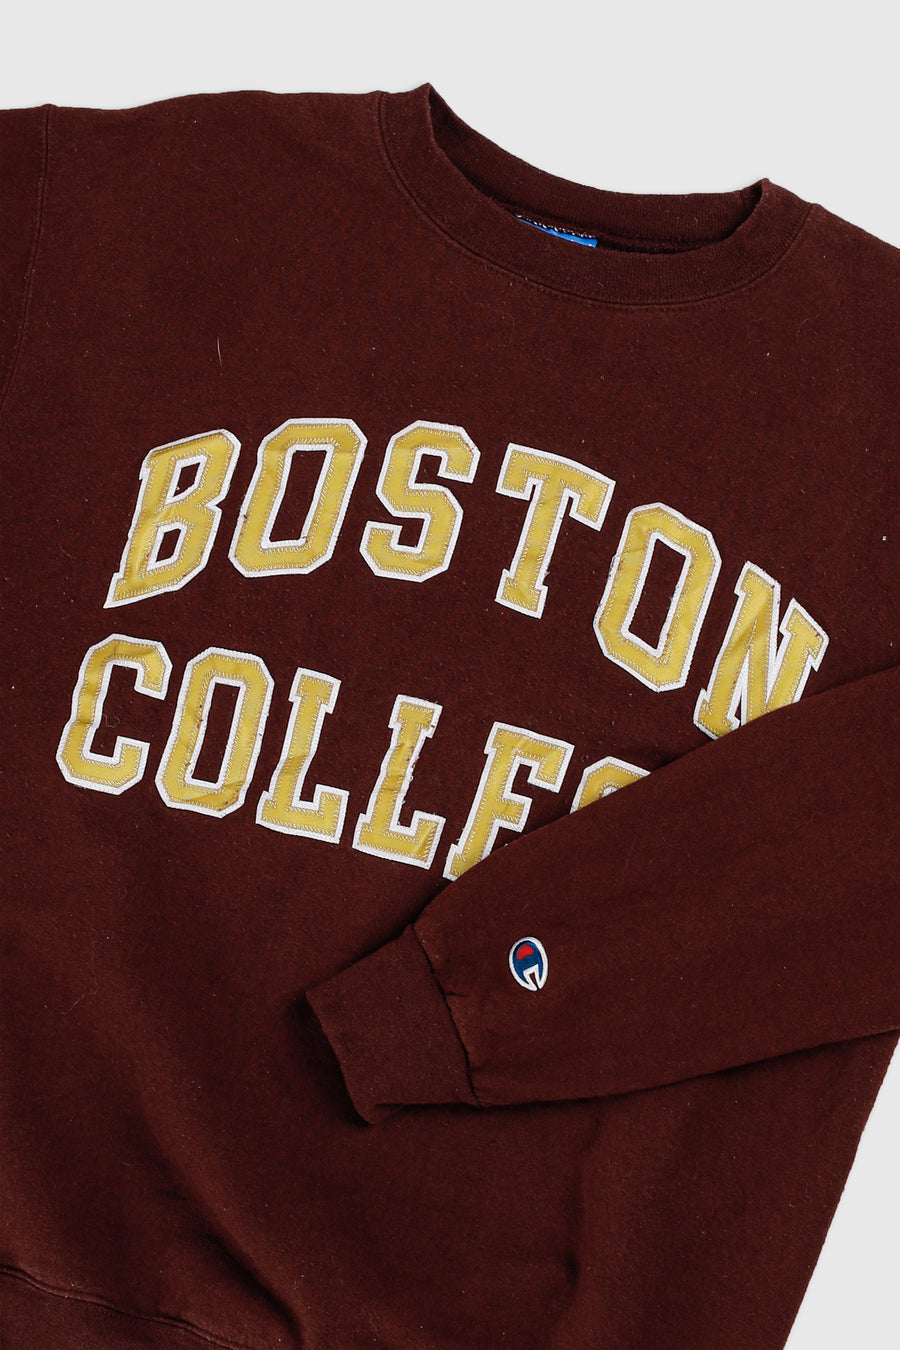 Vintage Boston College Sweatshirt - S